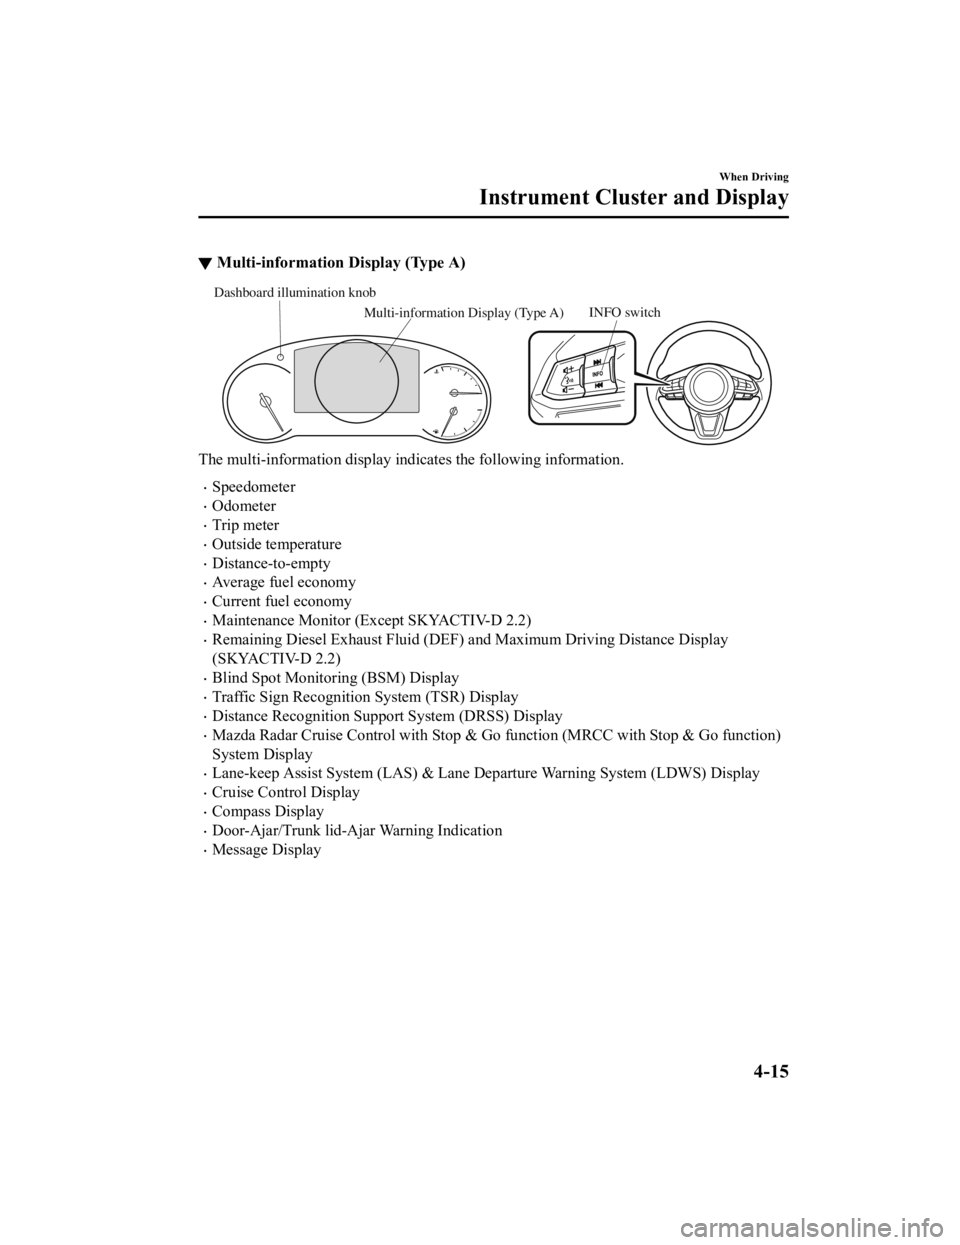 MAZDA MODEL 6 2021  Owners Manual ▼Multi-information Display (Type A)
INFO switchMulti-information Display (Type A)
Dashboard illumination knob
The multi-information display indi
cates the following information.
Speedometer
Od